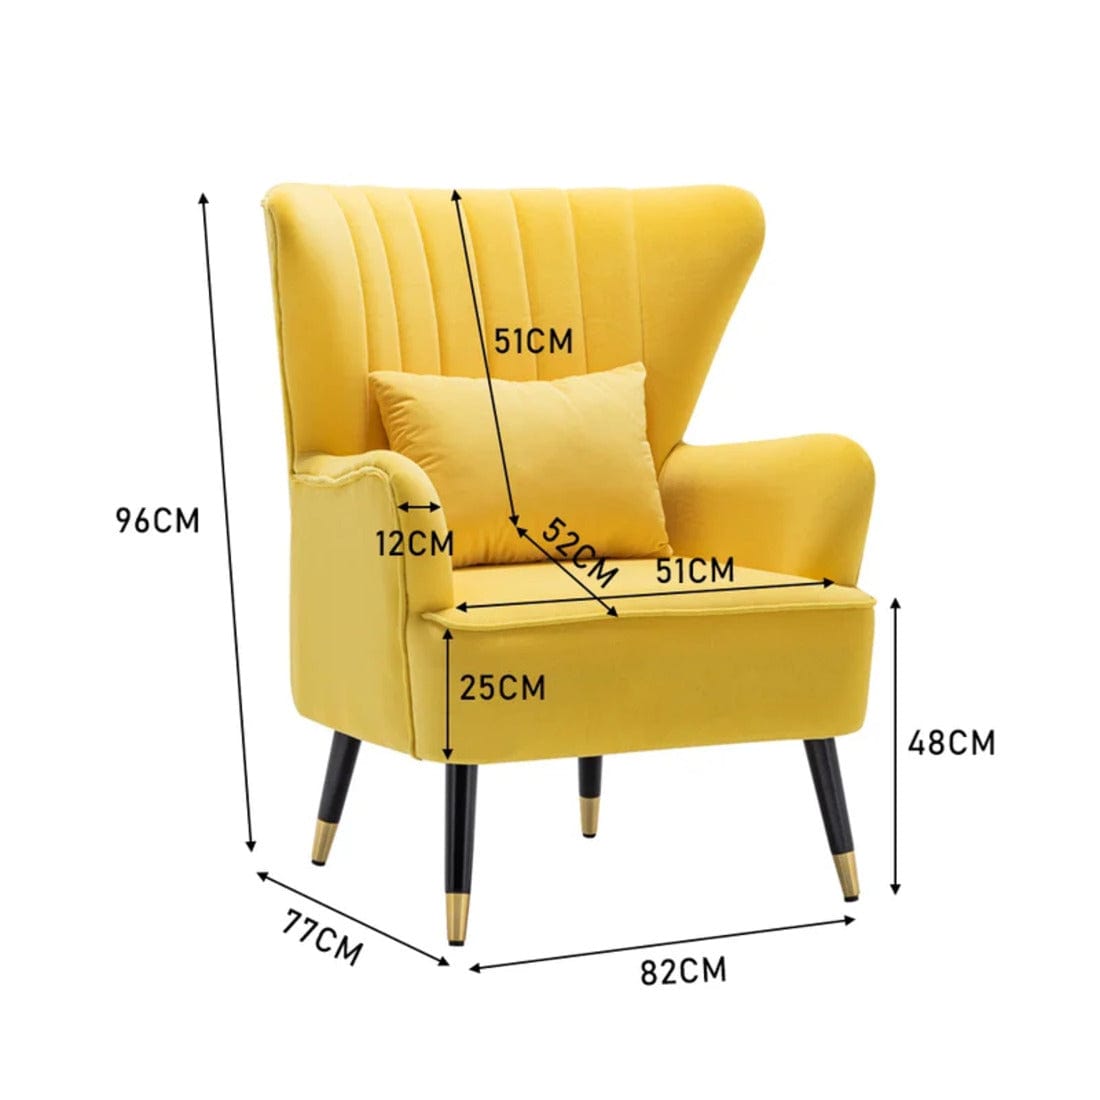 Azriela accent/lounge chair